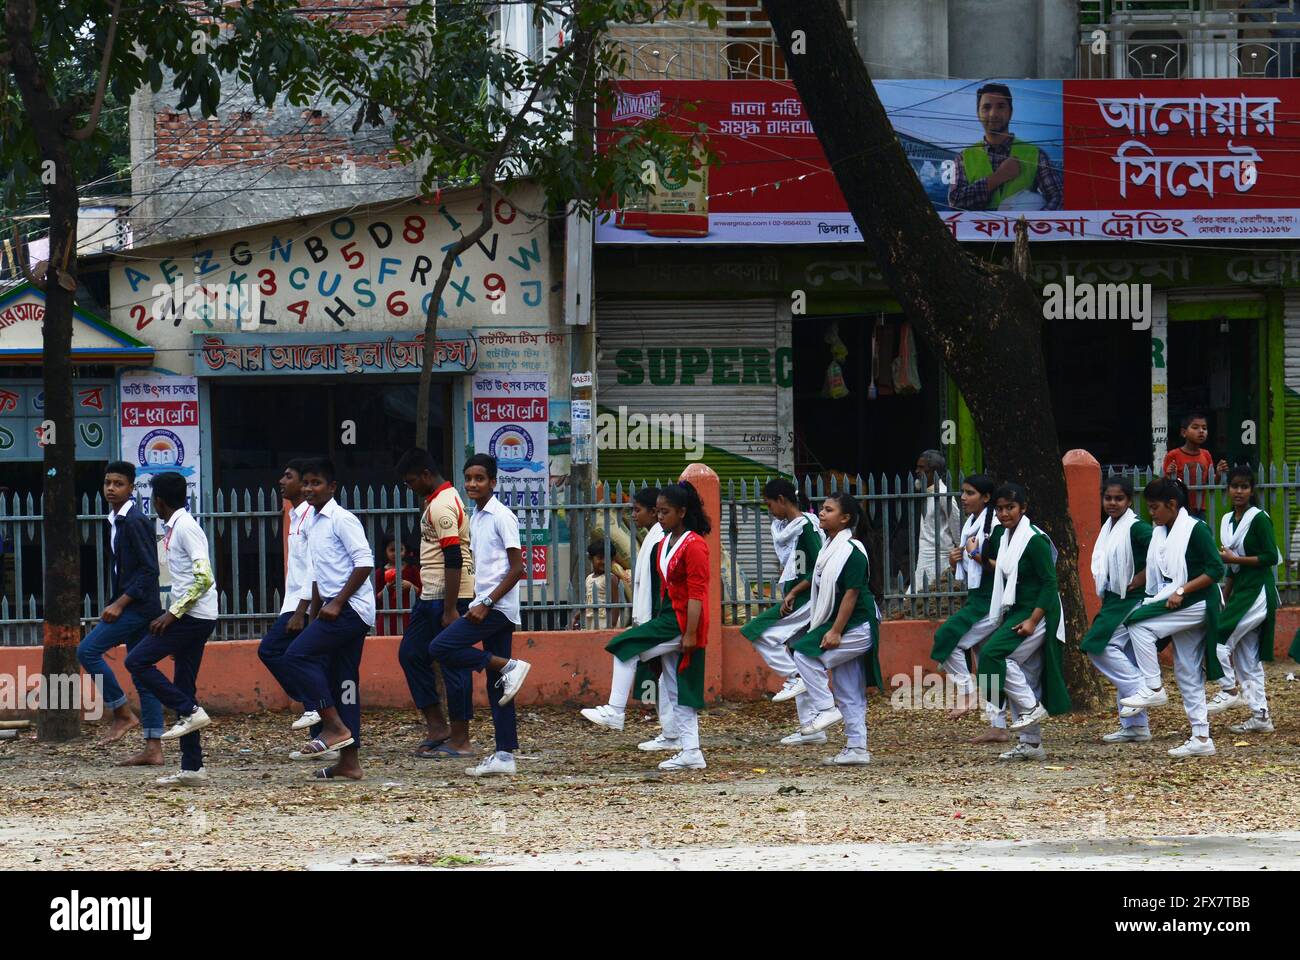 Bangladeshi school children marching in their school's courtyard. Dhaka, Bangladesh. Stock Photo